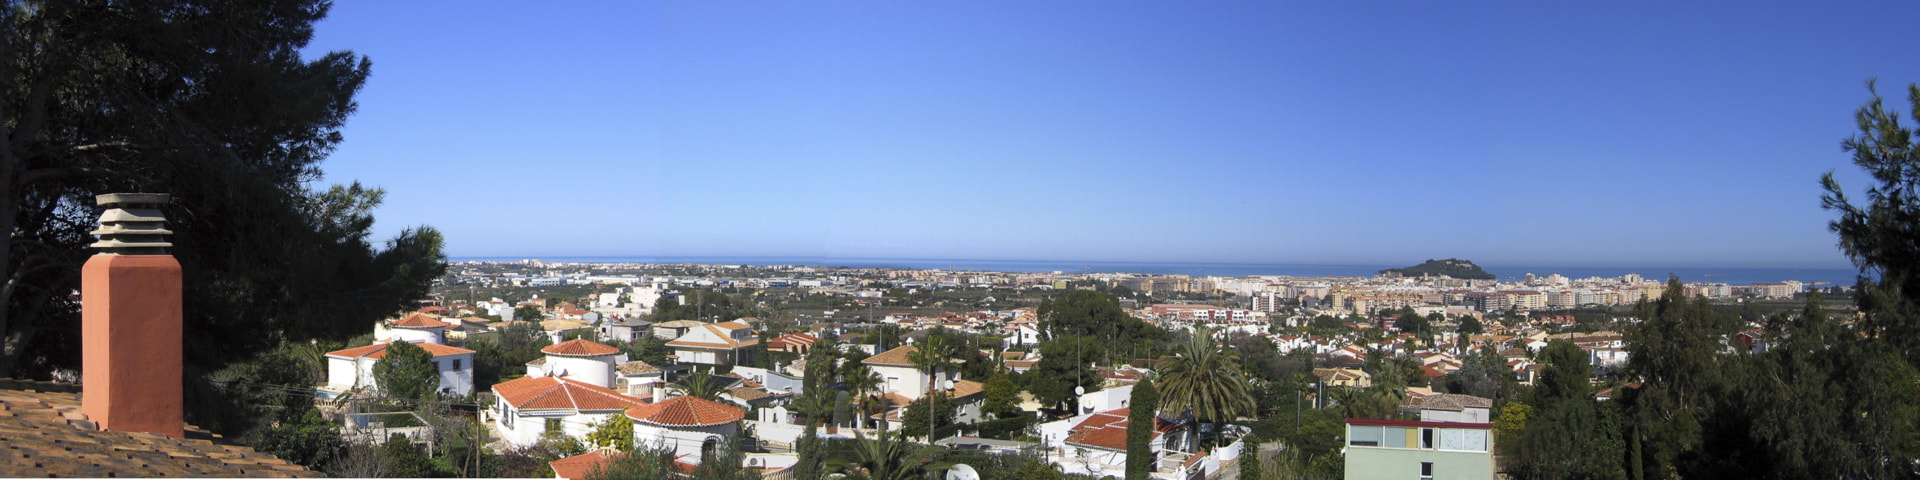 Large House with sea views, Pedrera Denia